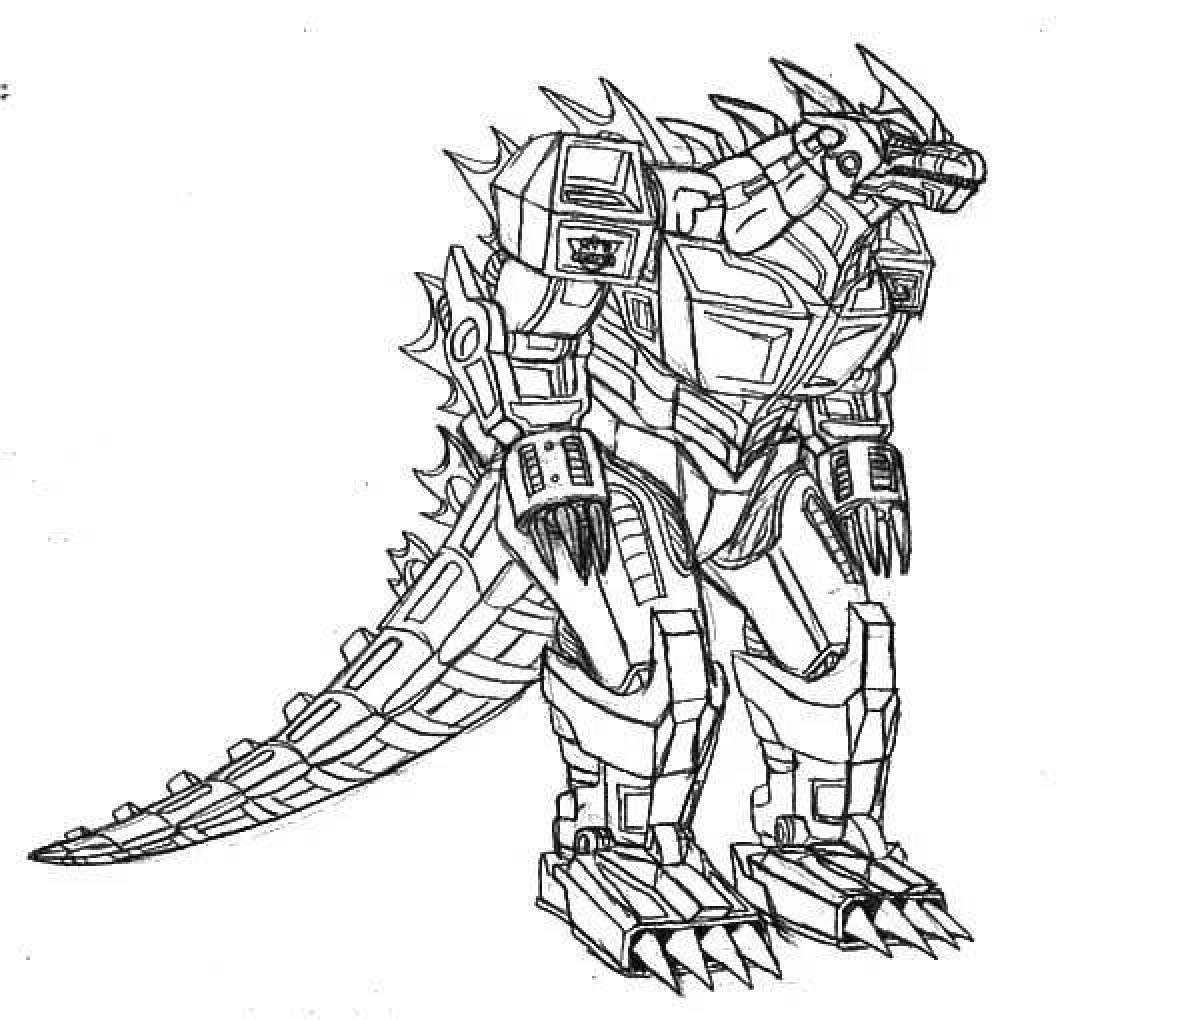 Godzilla's benevolent robot coloring page